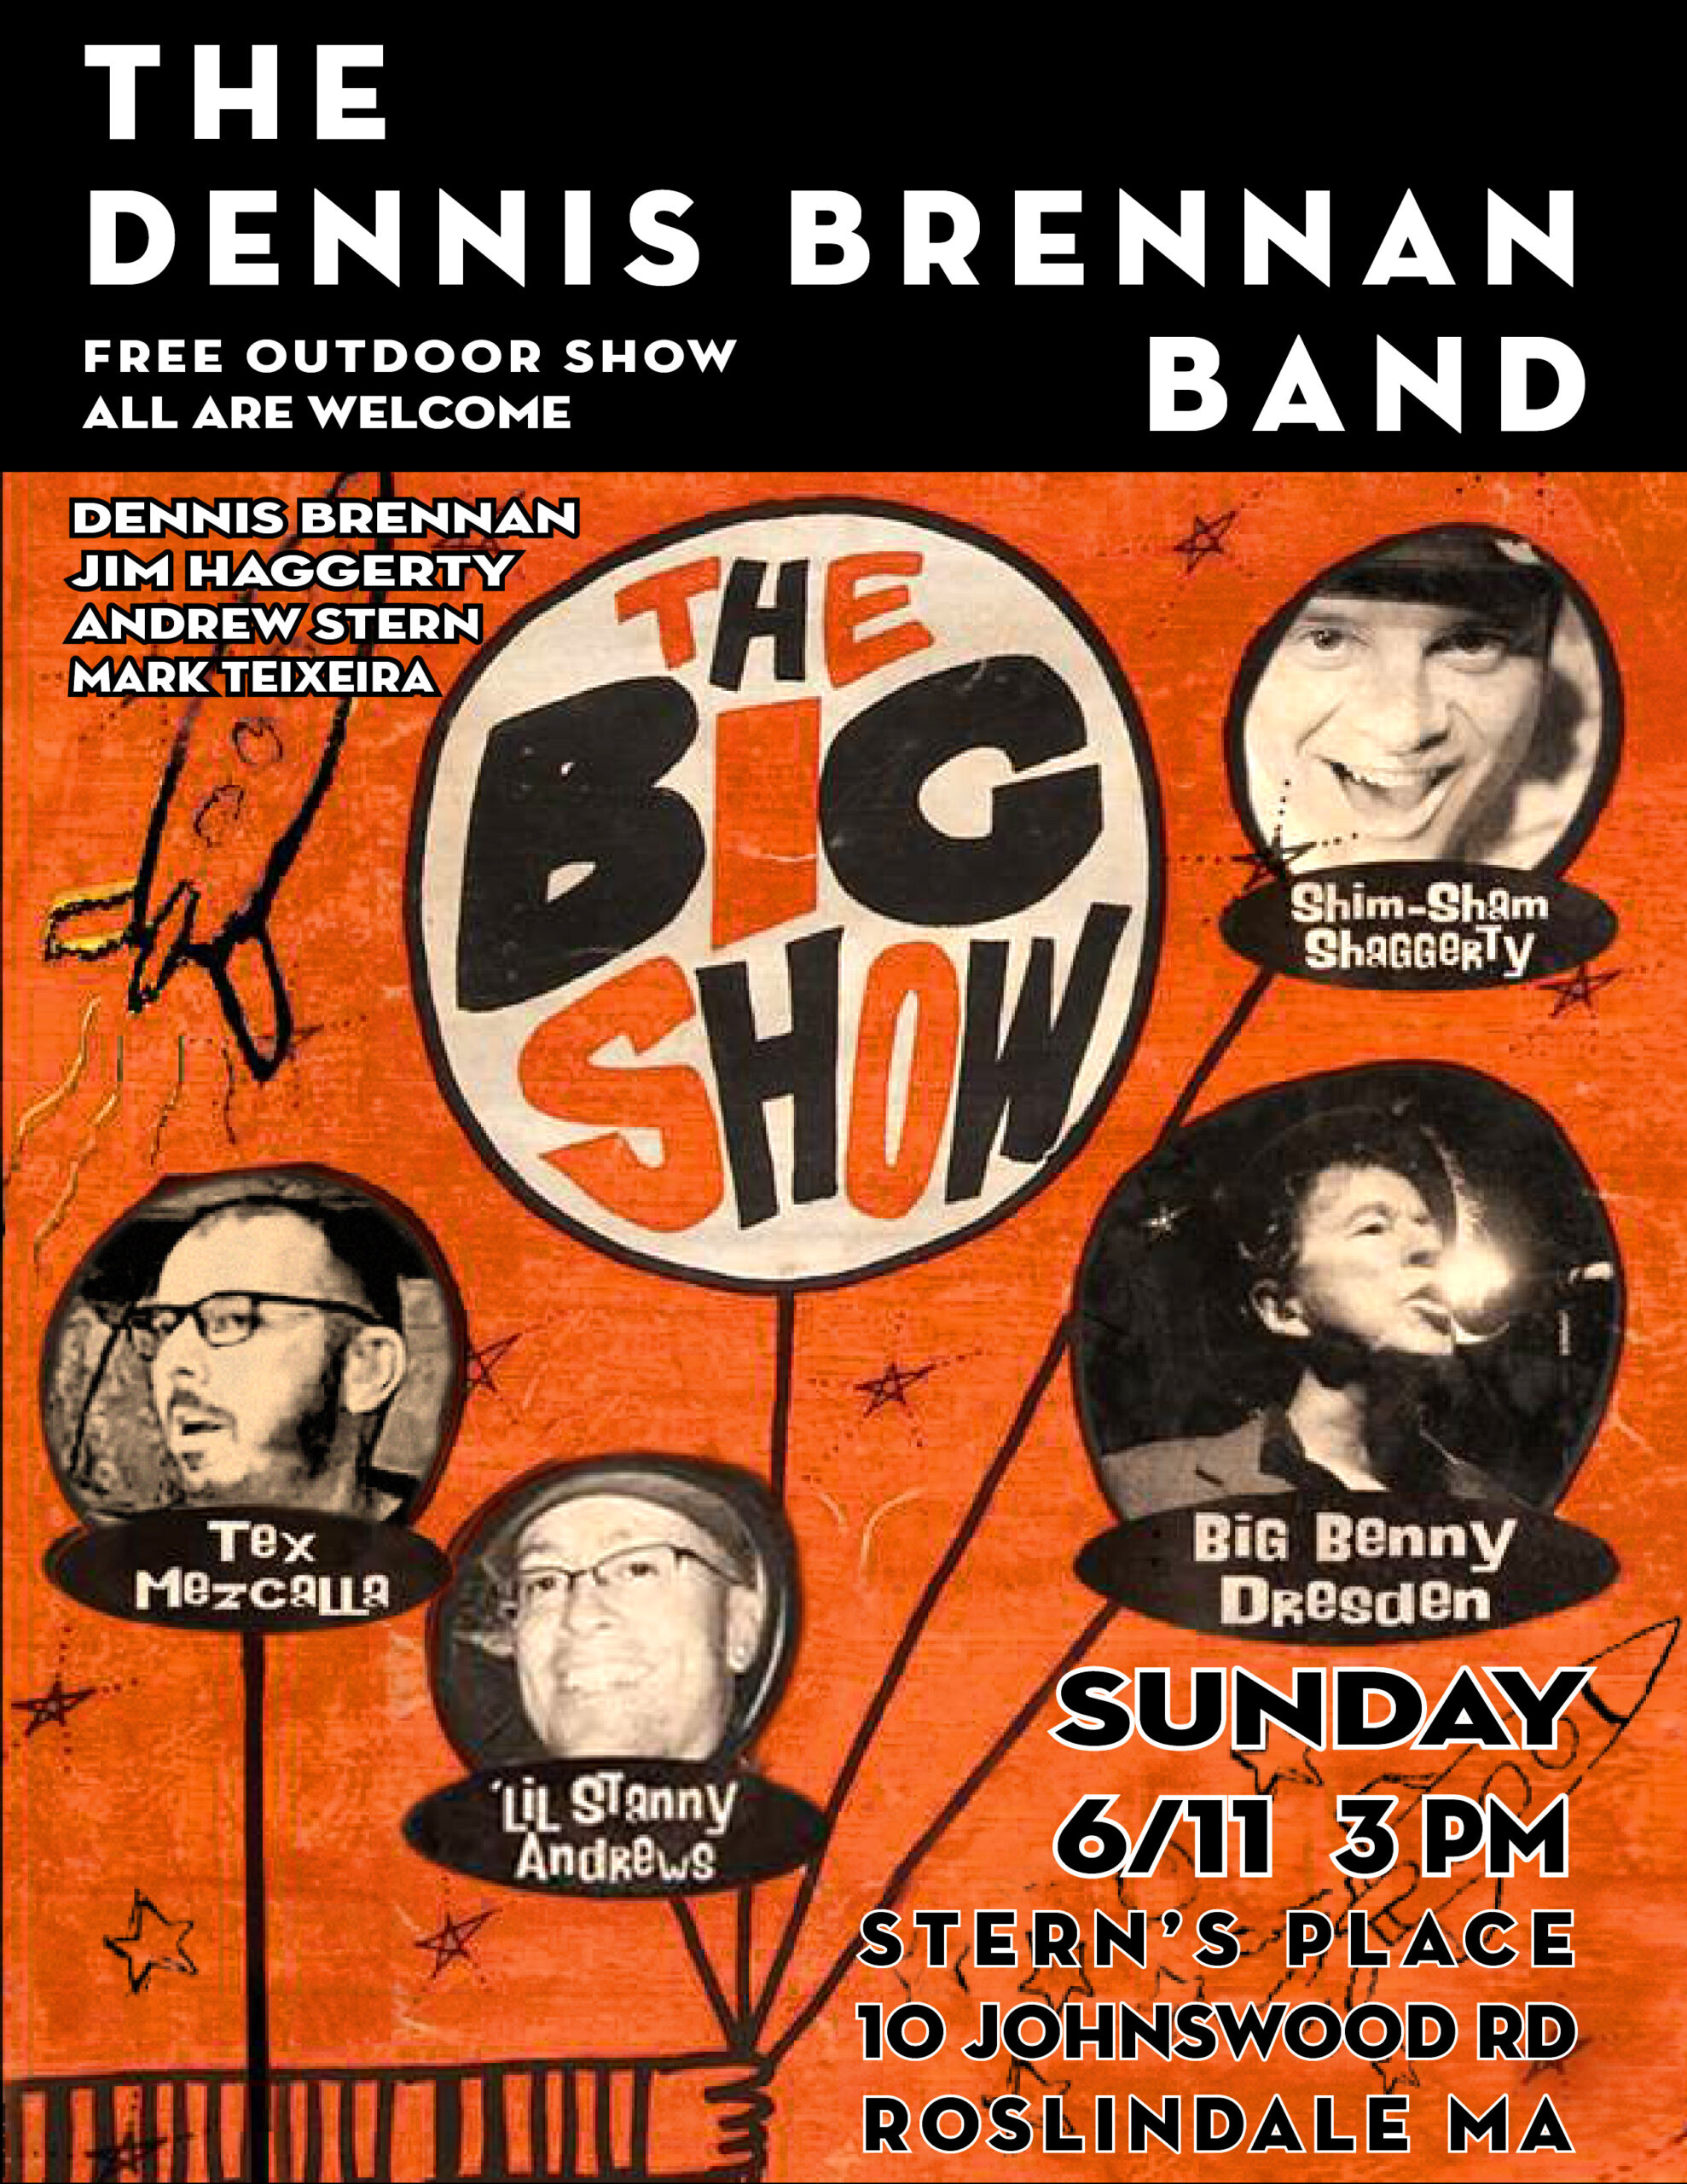 Dennis Brennan Band patio show: Sunday June 11!